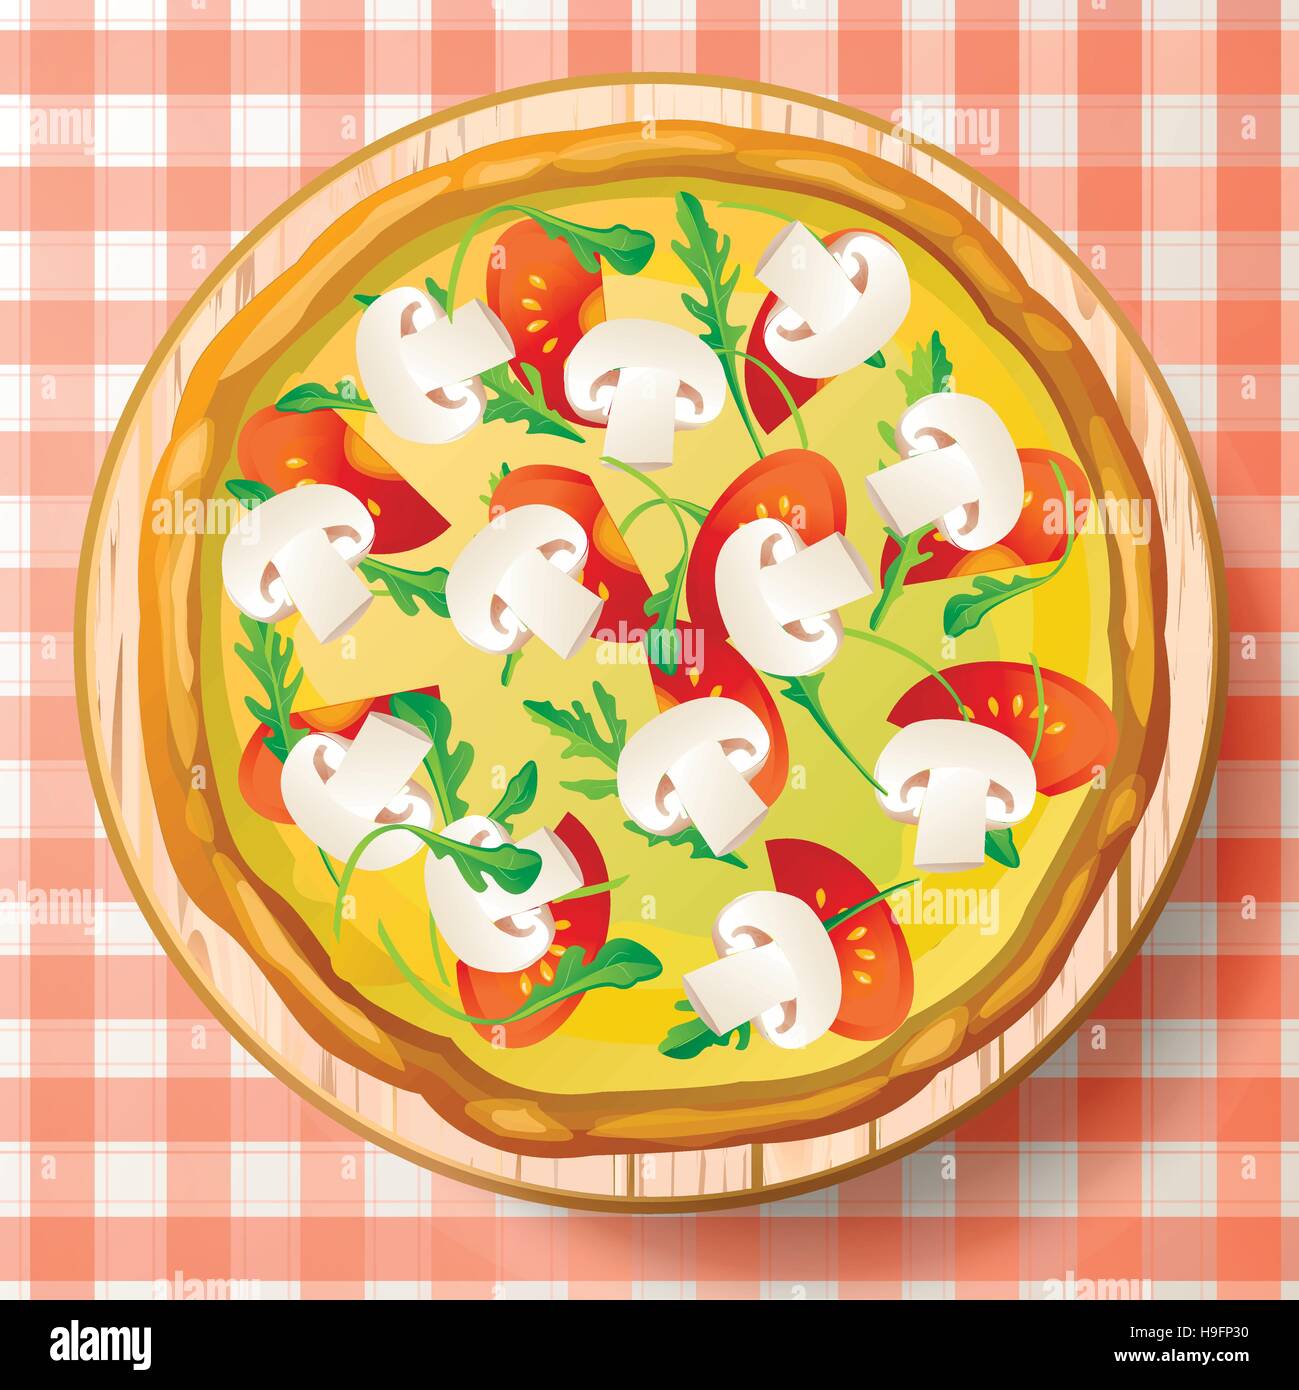 Pizza italiana champiñón setas queso mozzarella tomate dulce sabroso rúcula rúcula cohetes tabla de cortar de madera. Vector hermoso signo menú Vista superior Ilustración del Vector